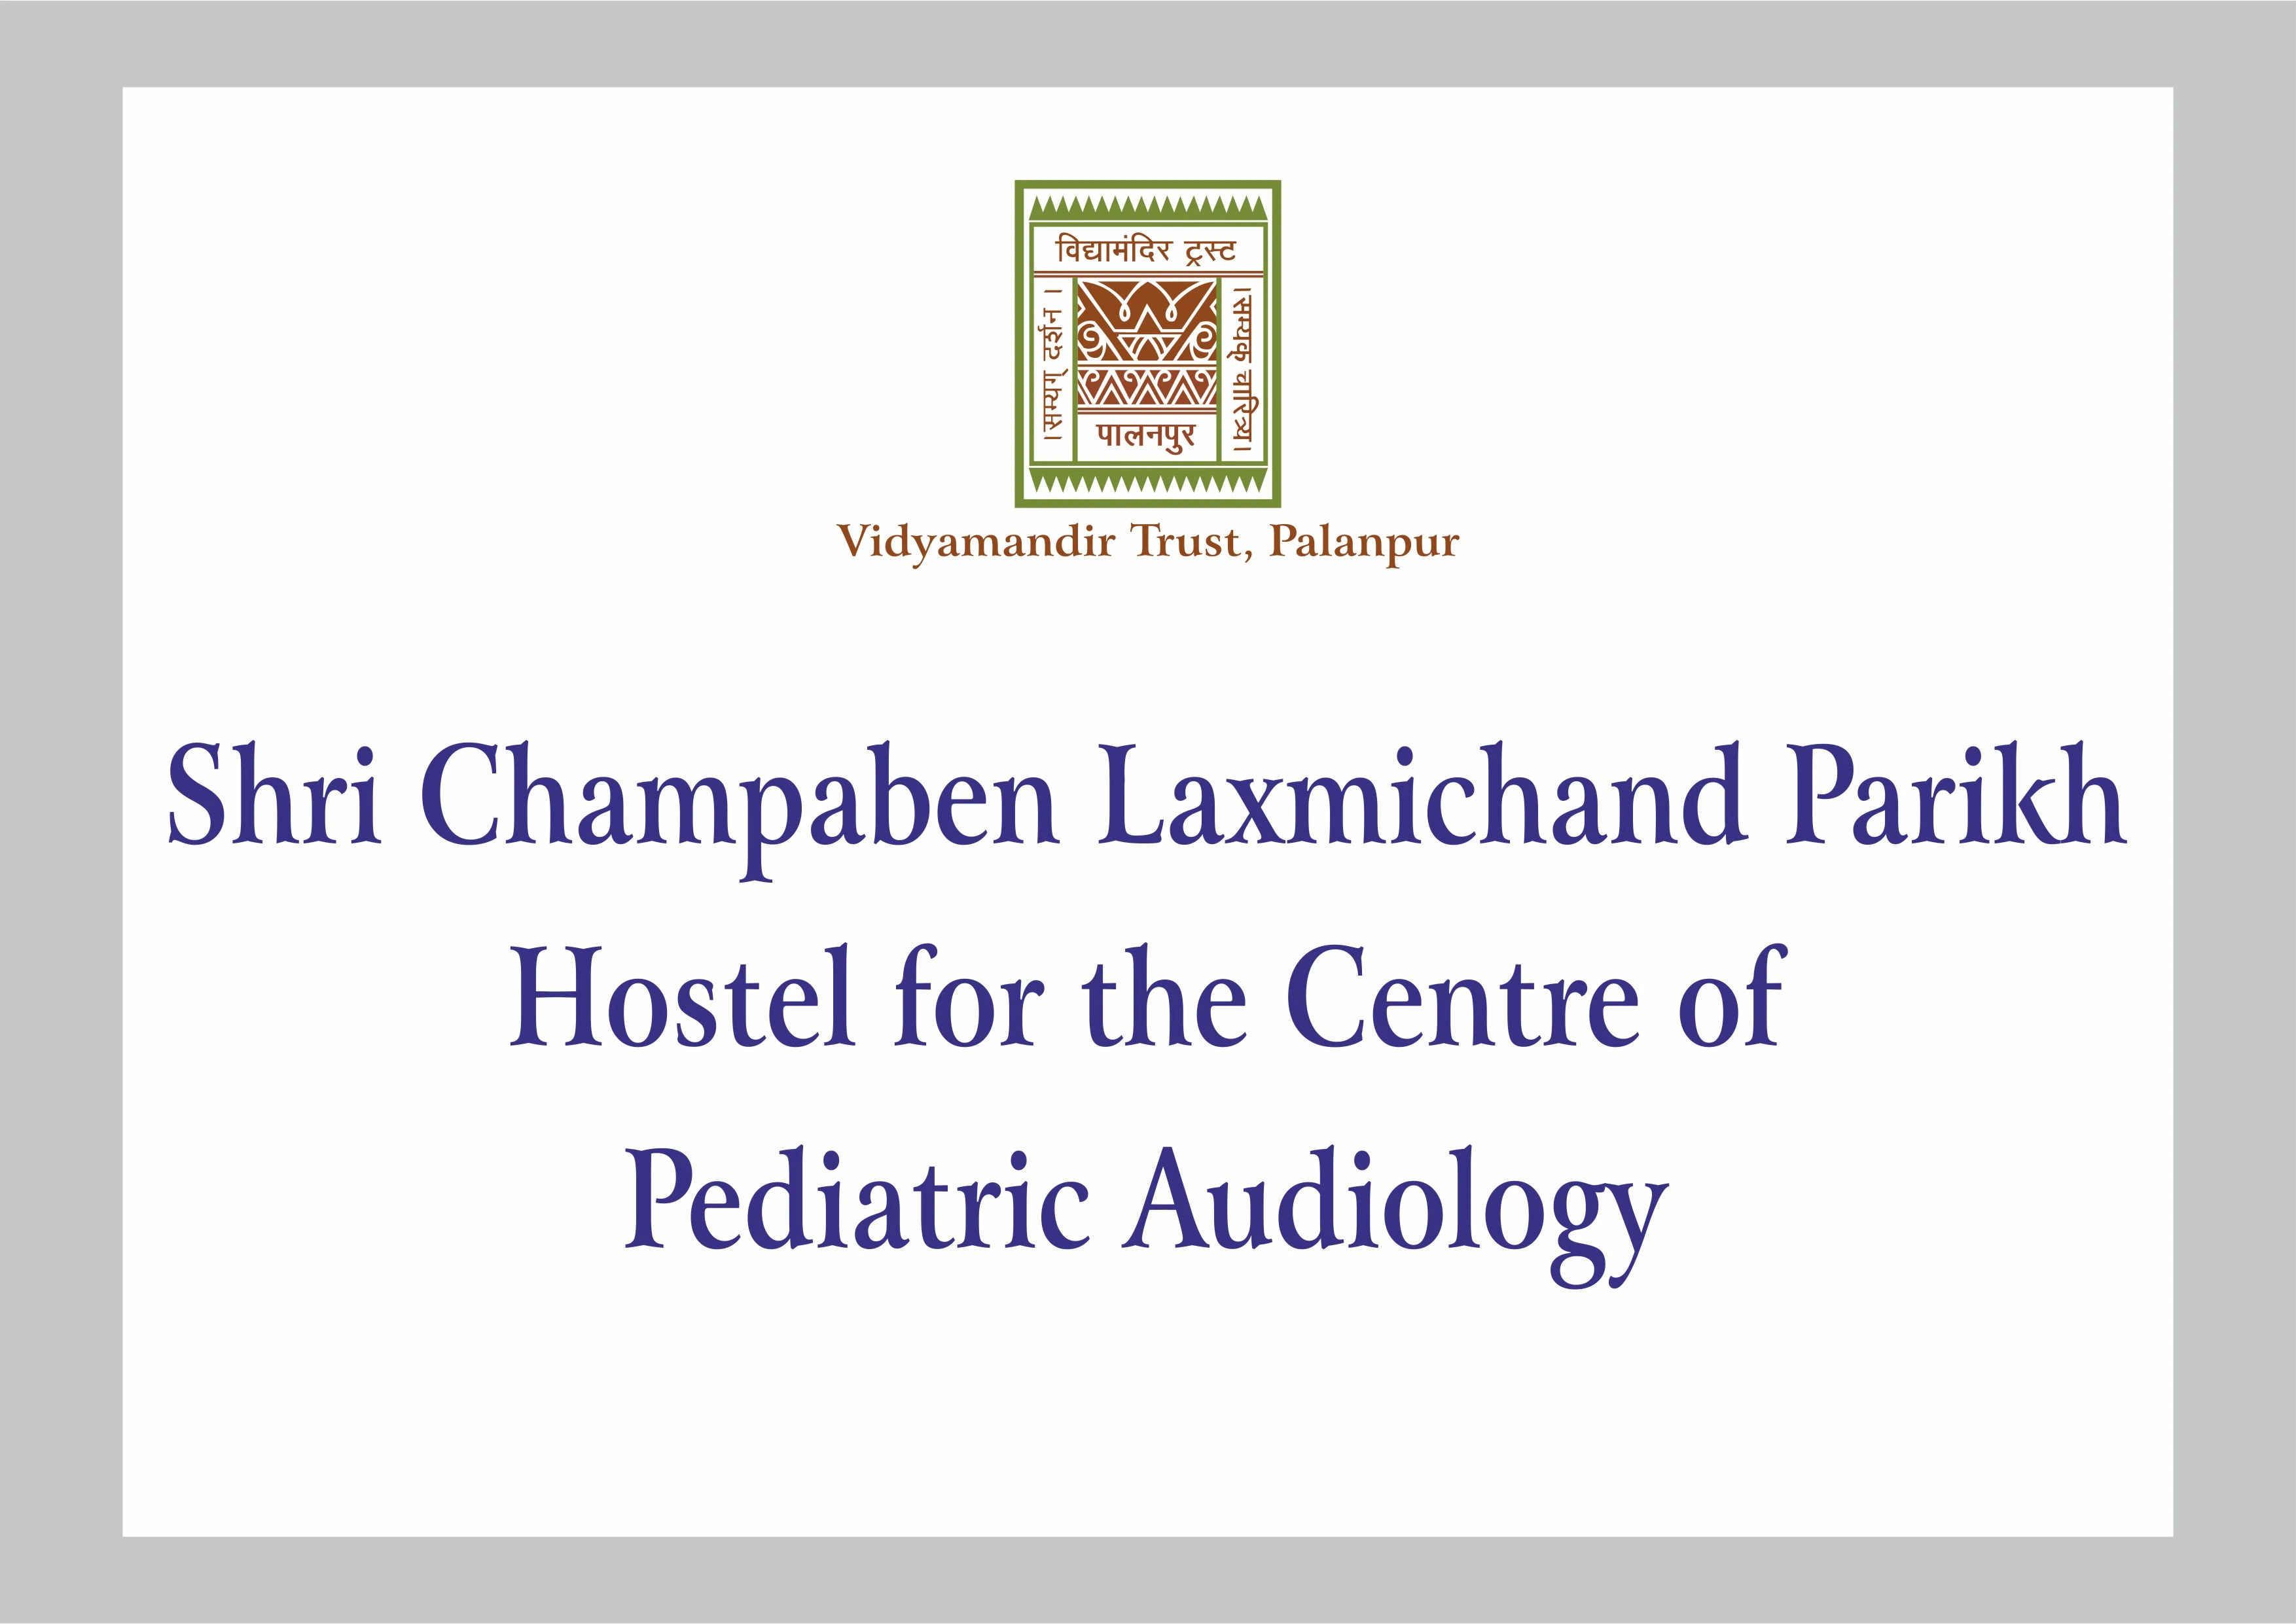 Shri Champaben Laxmichand Parikh Hostel for the Centre of Pediatric Audiology